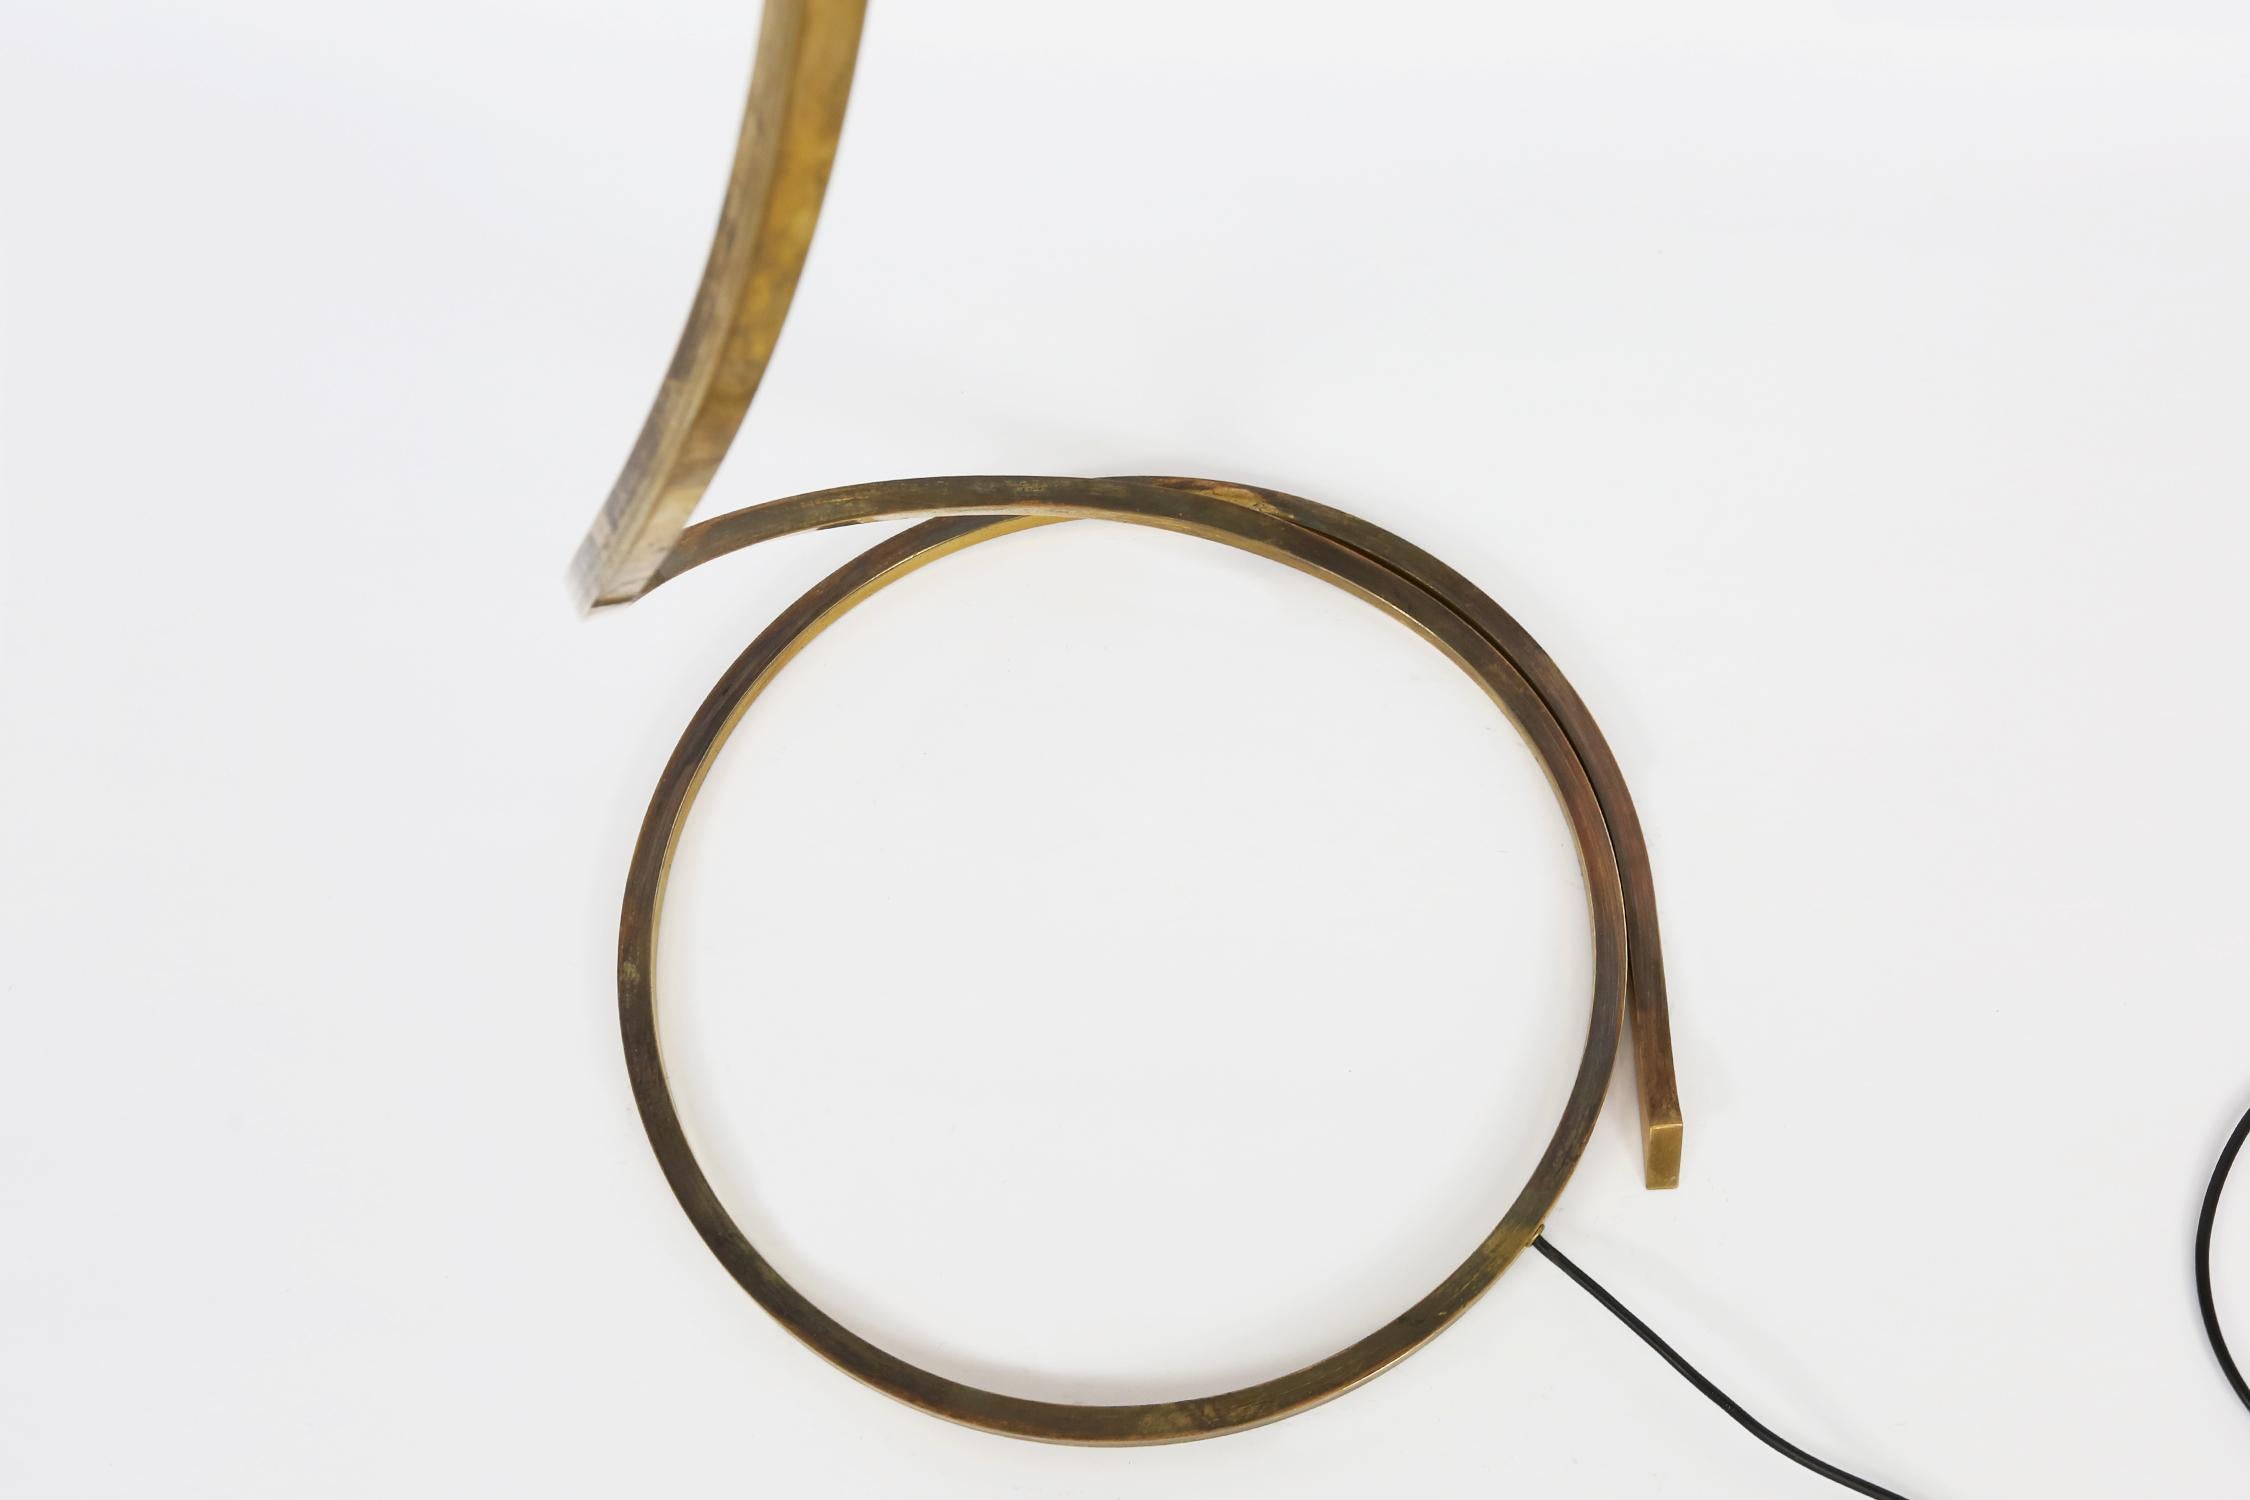 Tommaso Barbi Famous Italian Brass Leaf-Shaped “Foglia” Floor Lamp 1970s For Sale 3